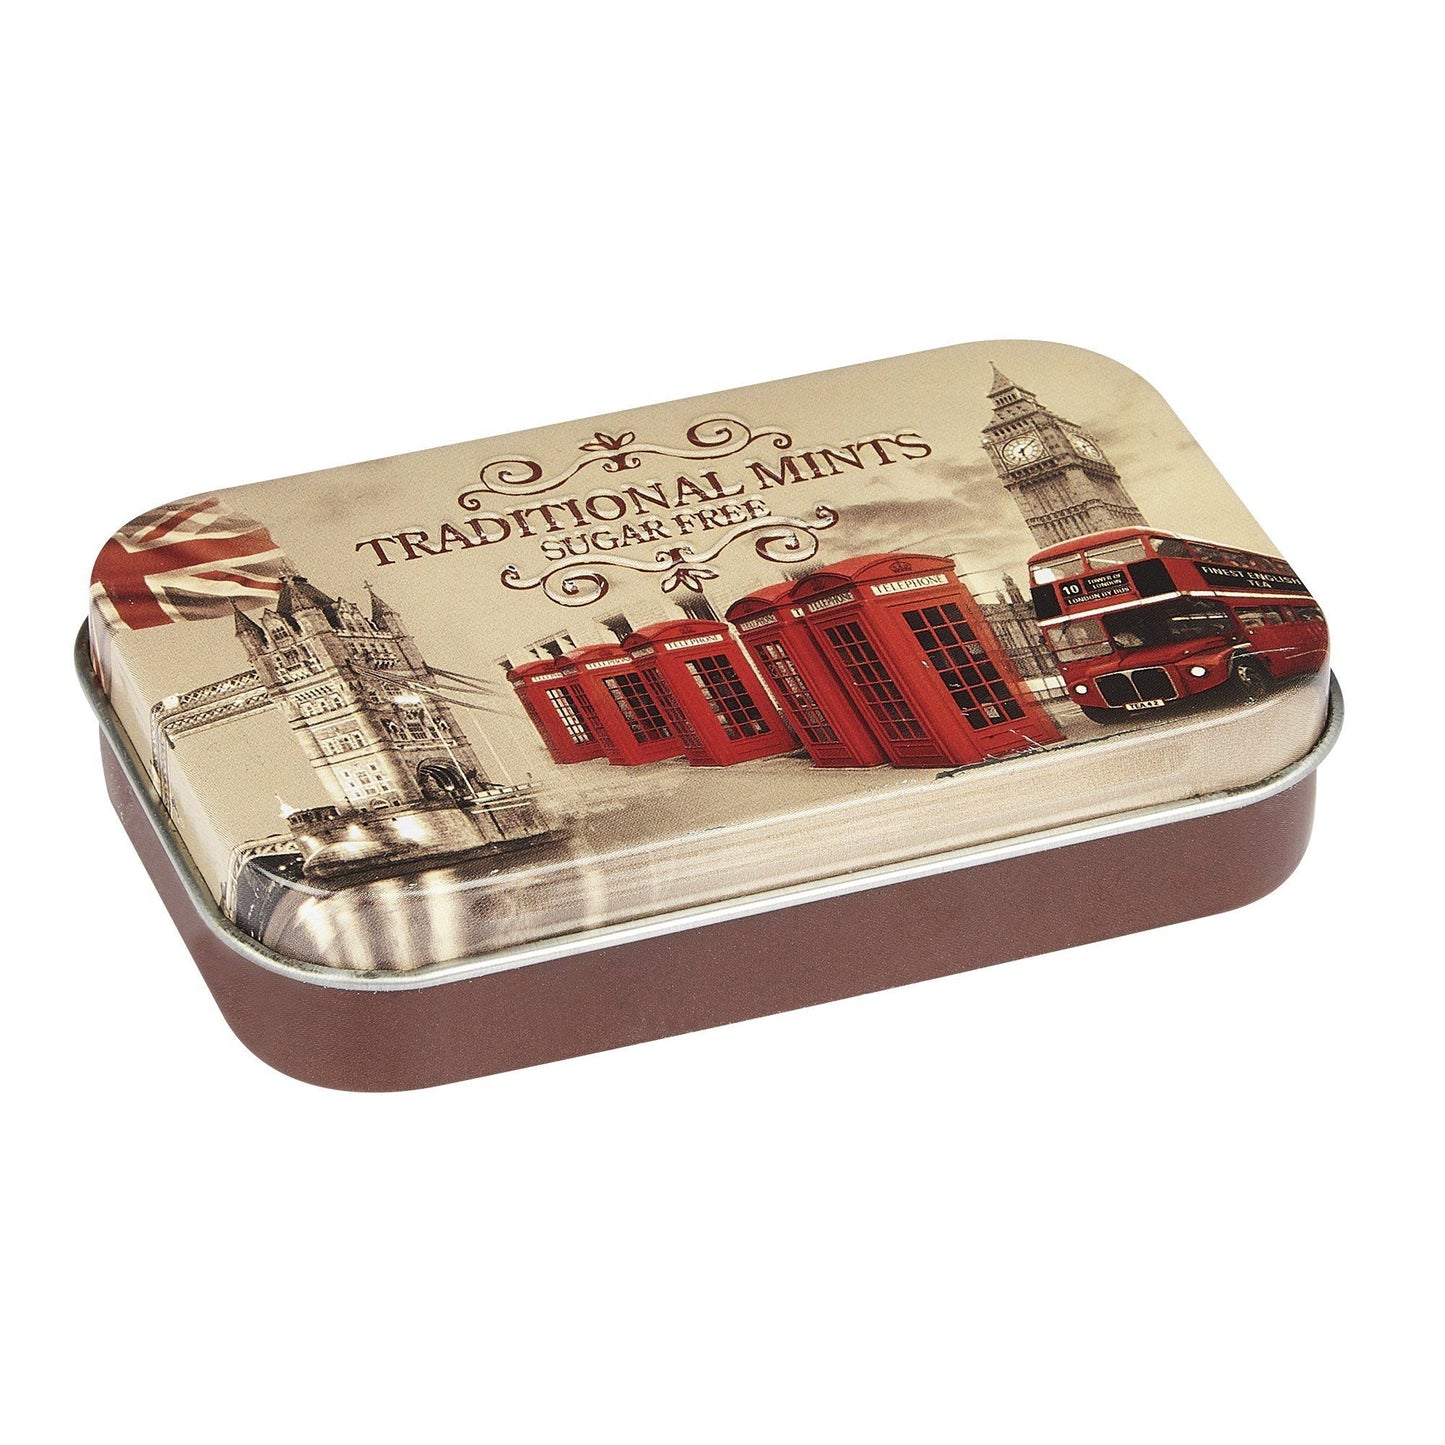 Vintage England Sugar Free Mints Pocket Tin 35g Mints New English Teas 